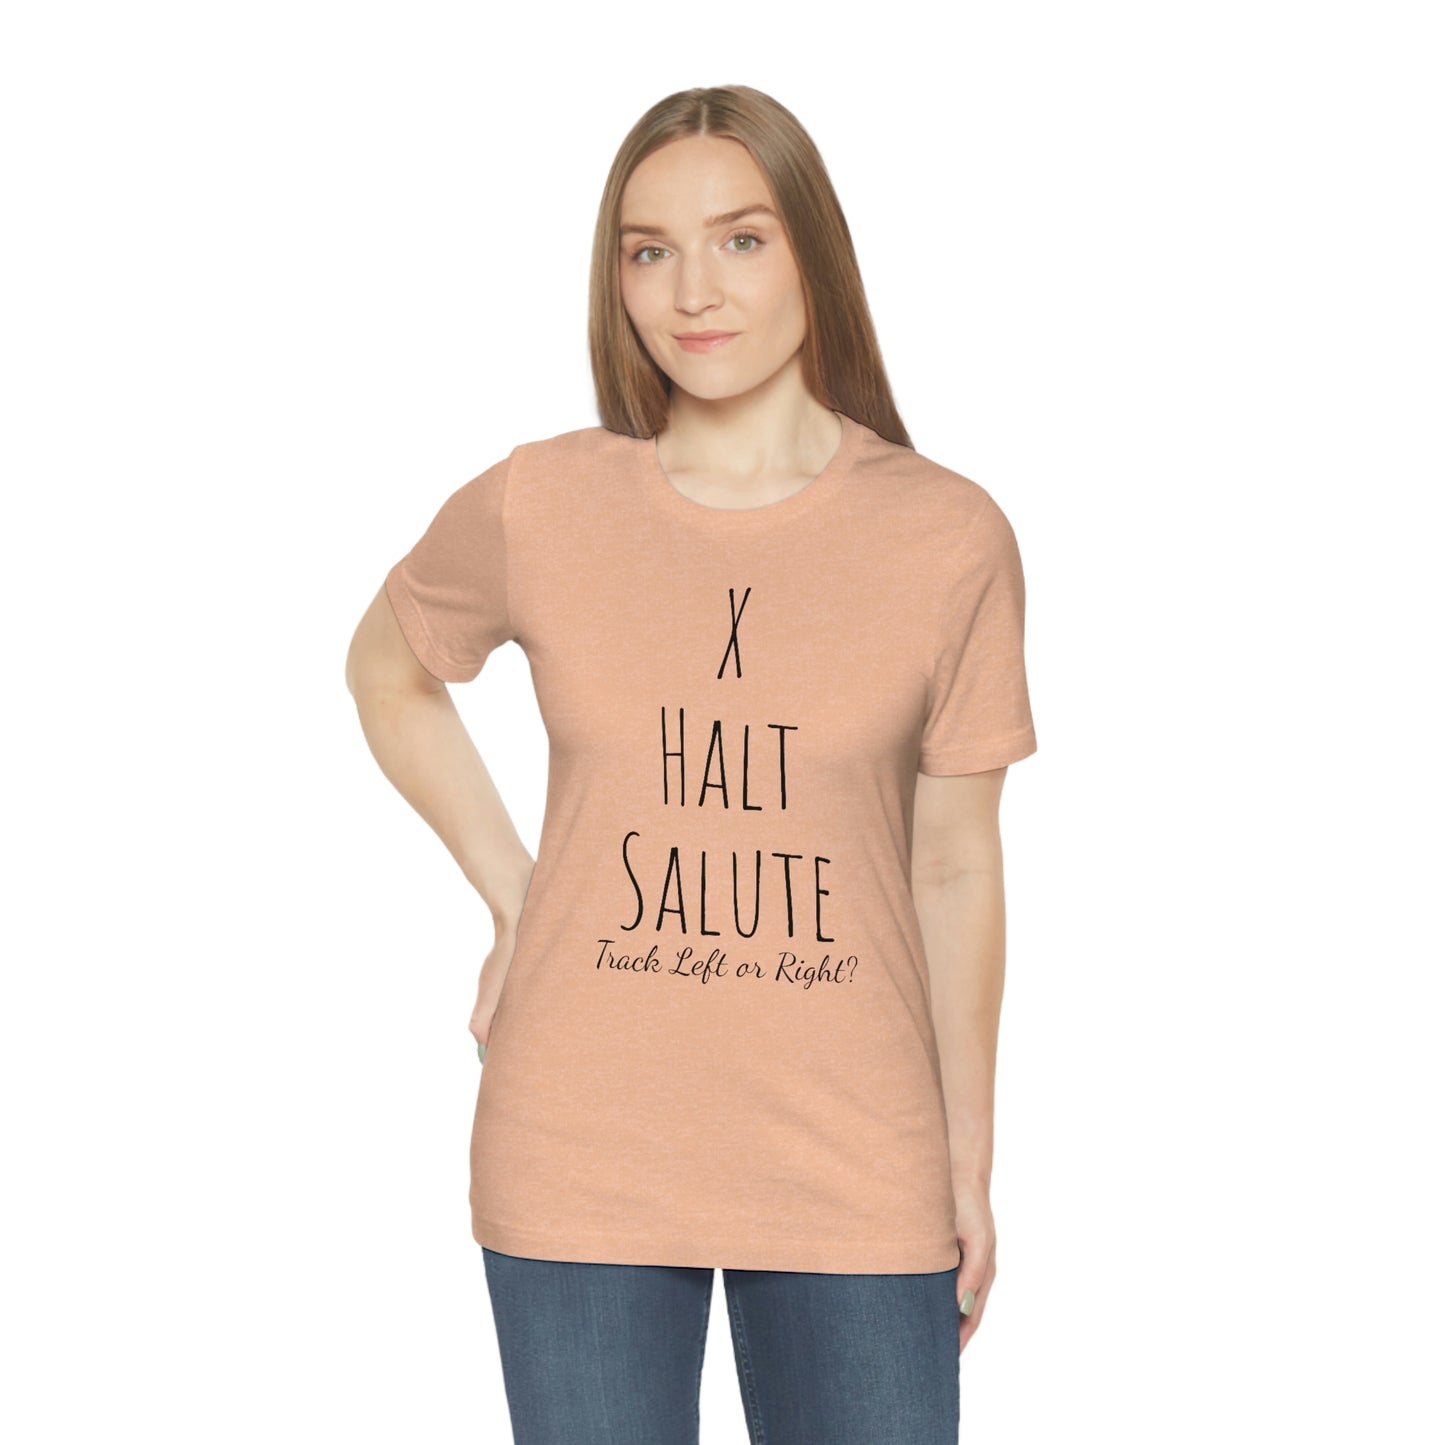 Shirt - X, Halt, Salute - Track Left or Right?